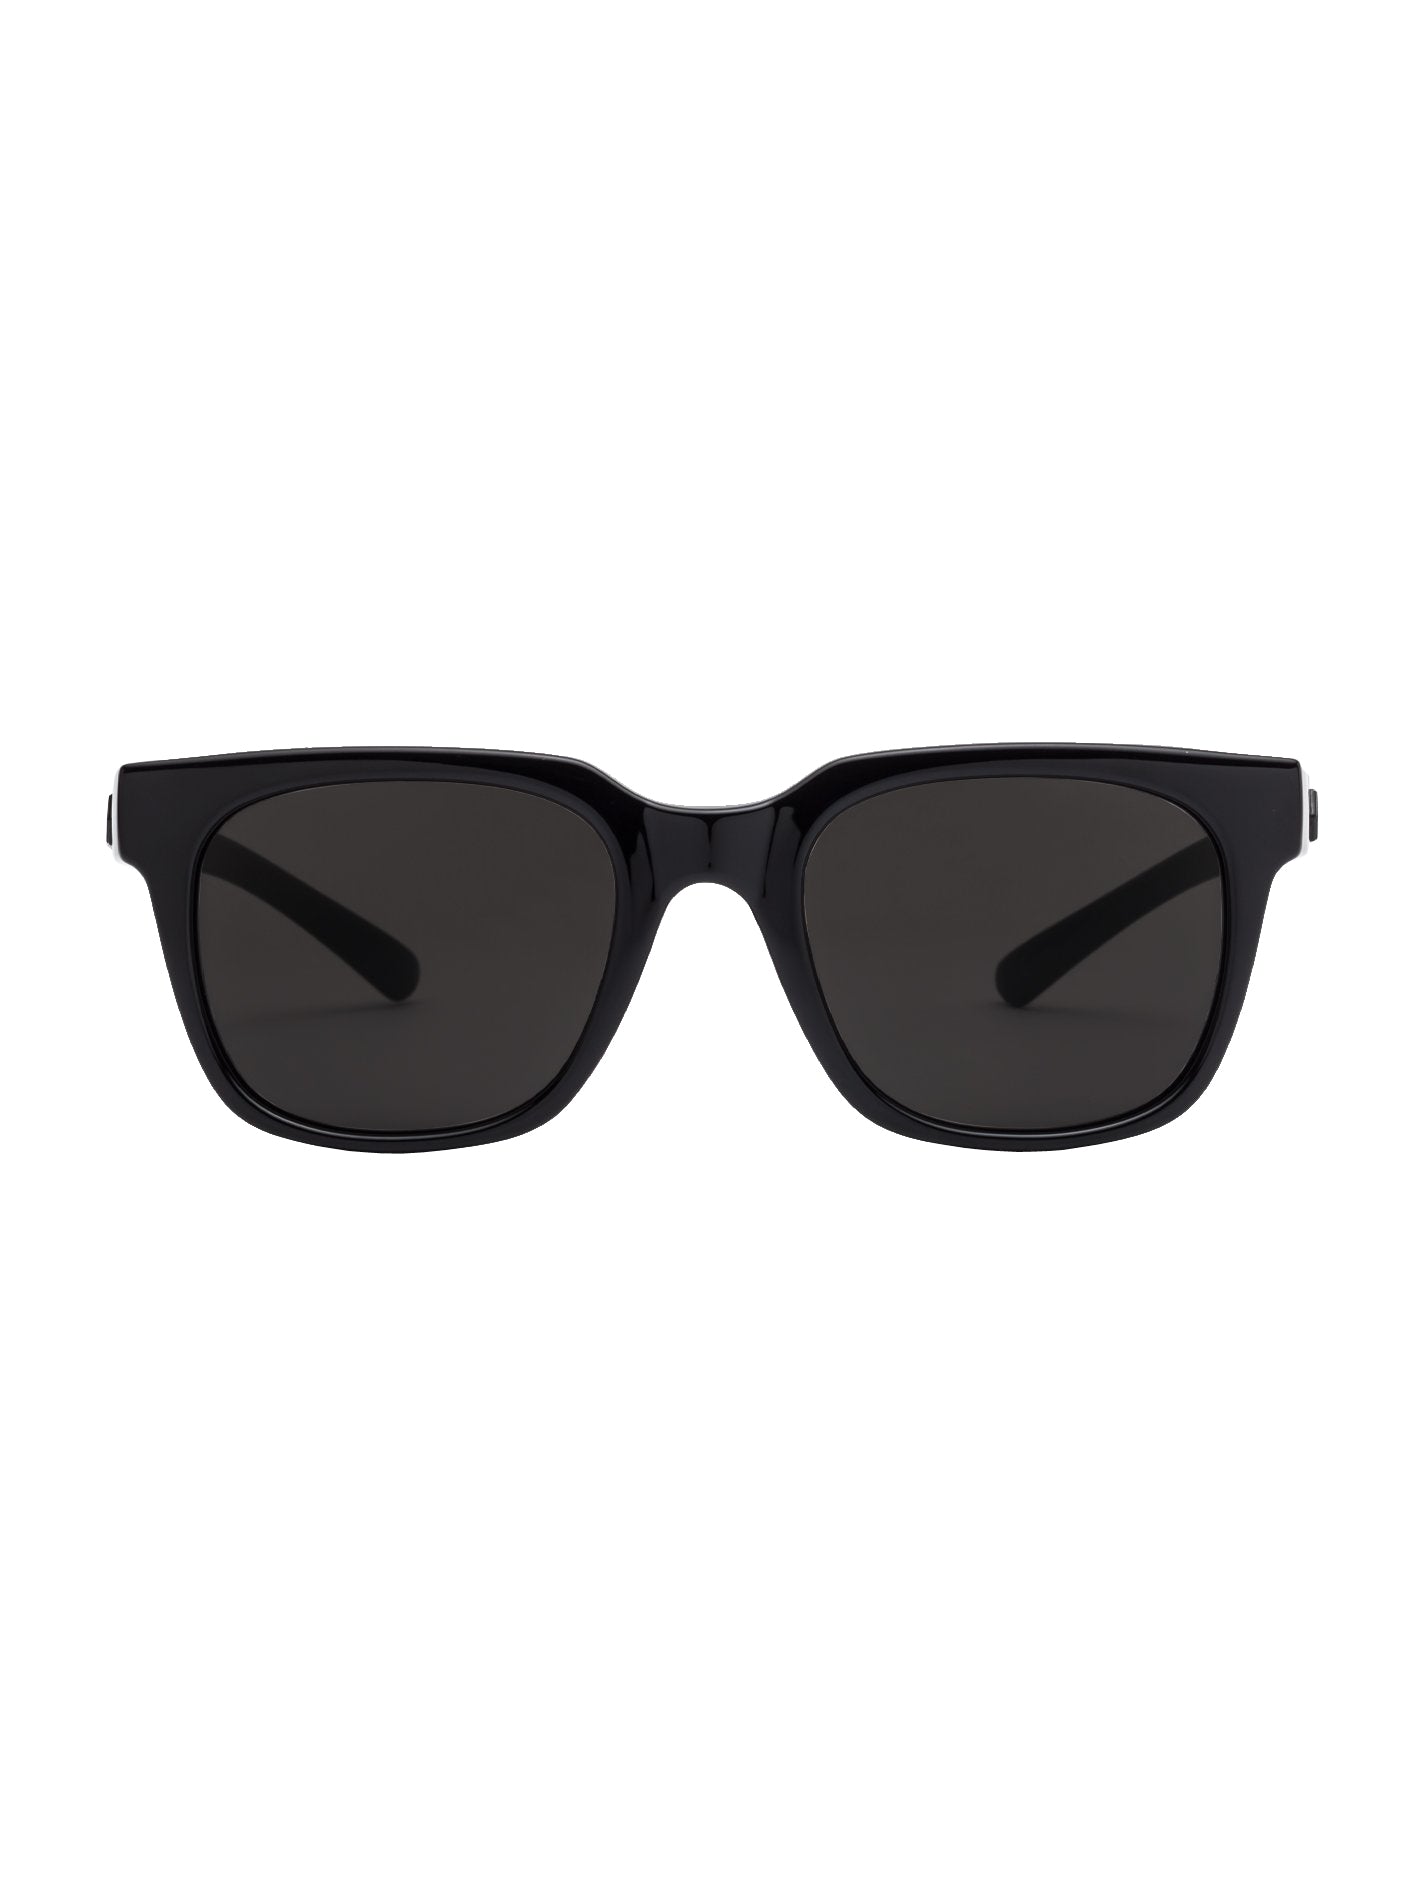 Volcom Morph sunglasses GlossBlack Gray